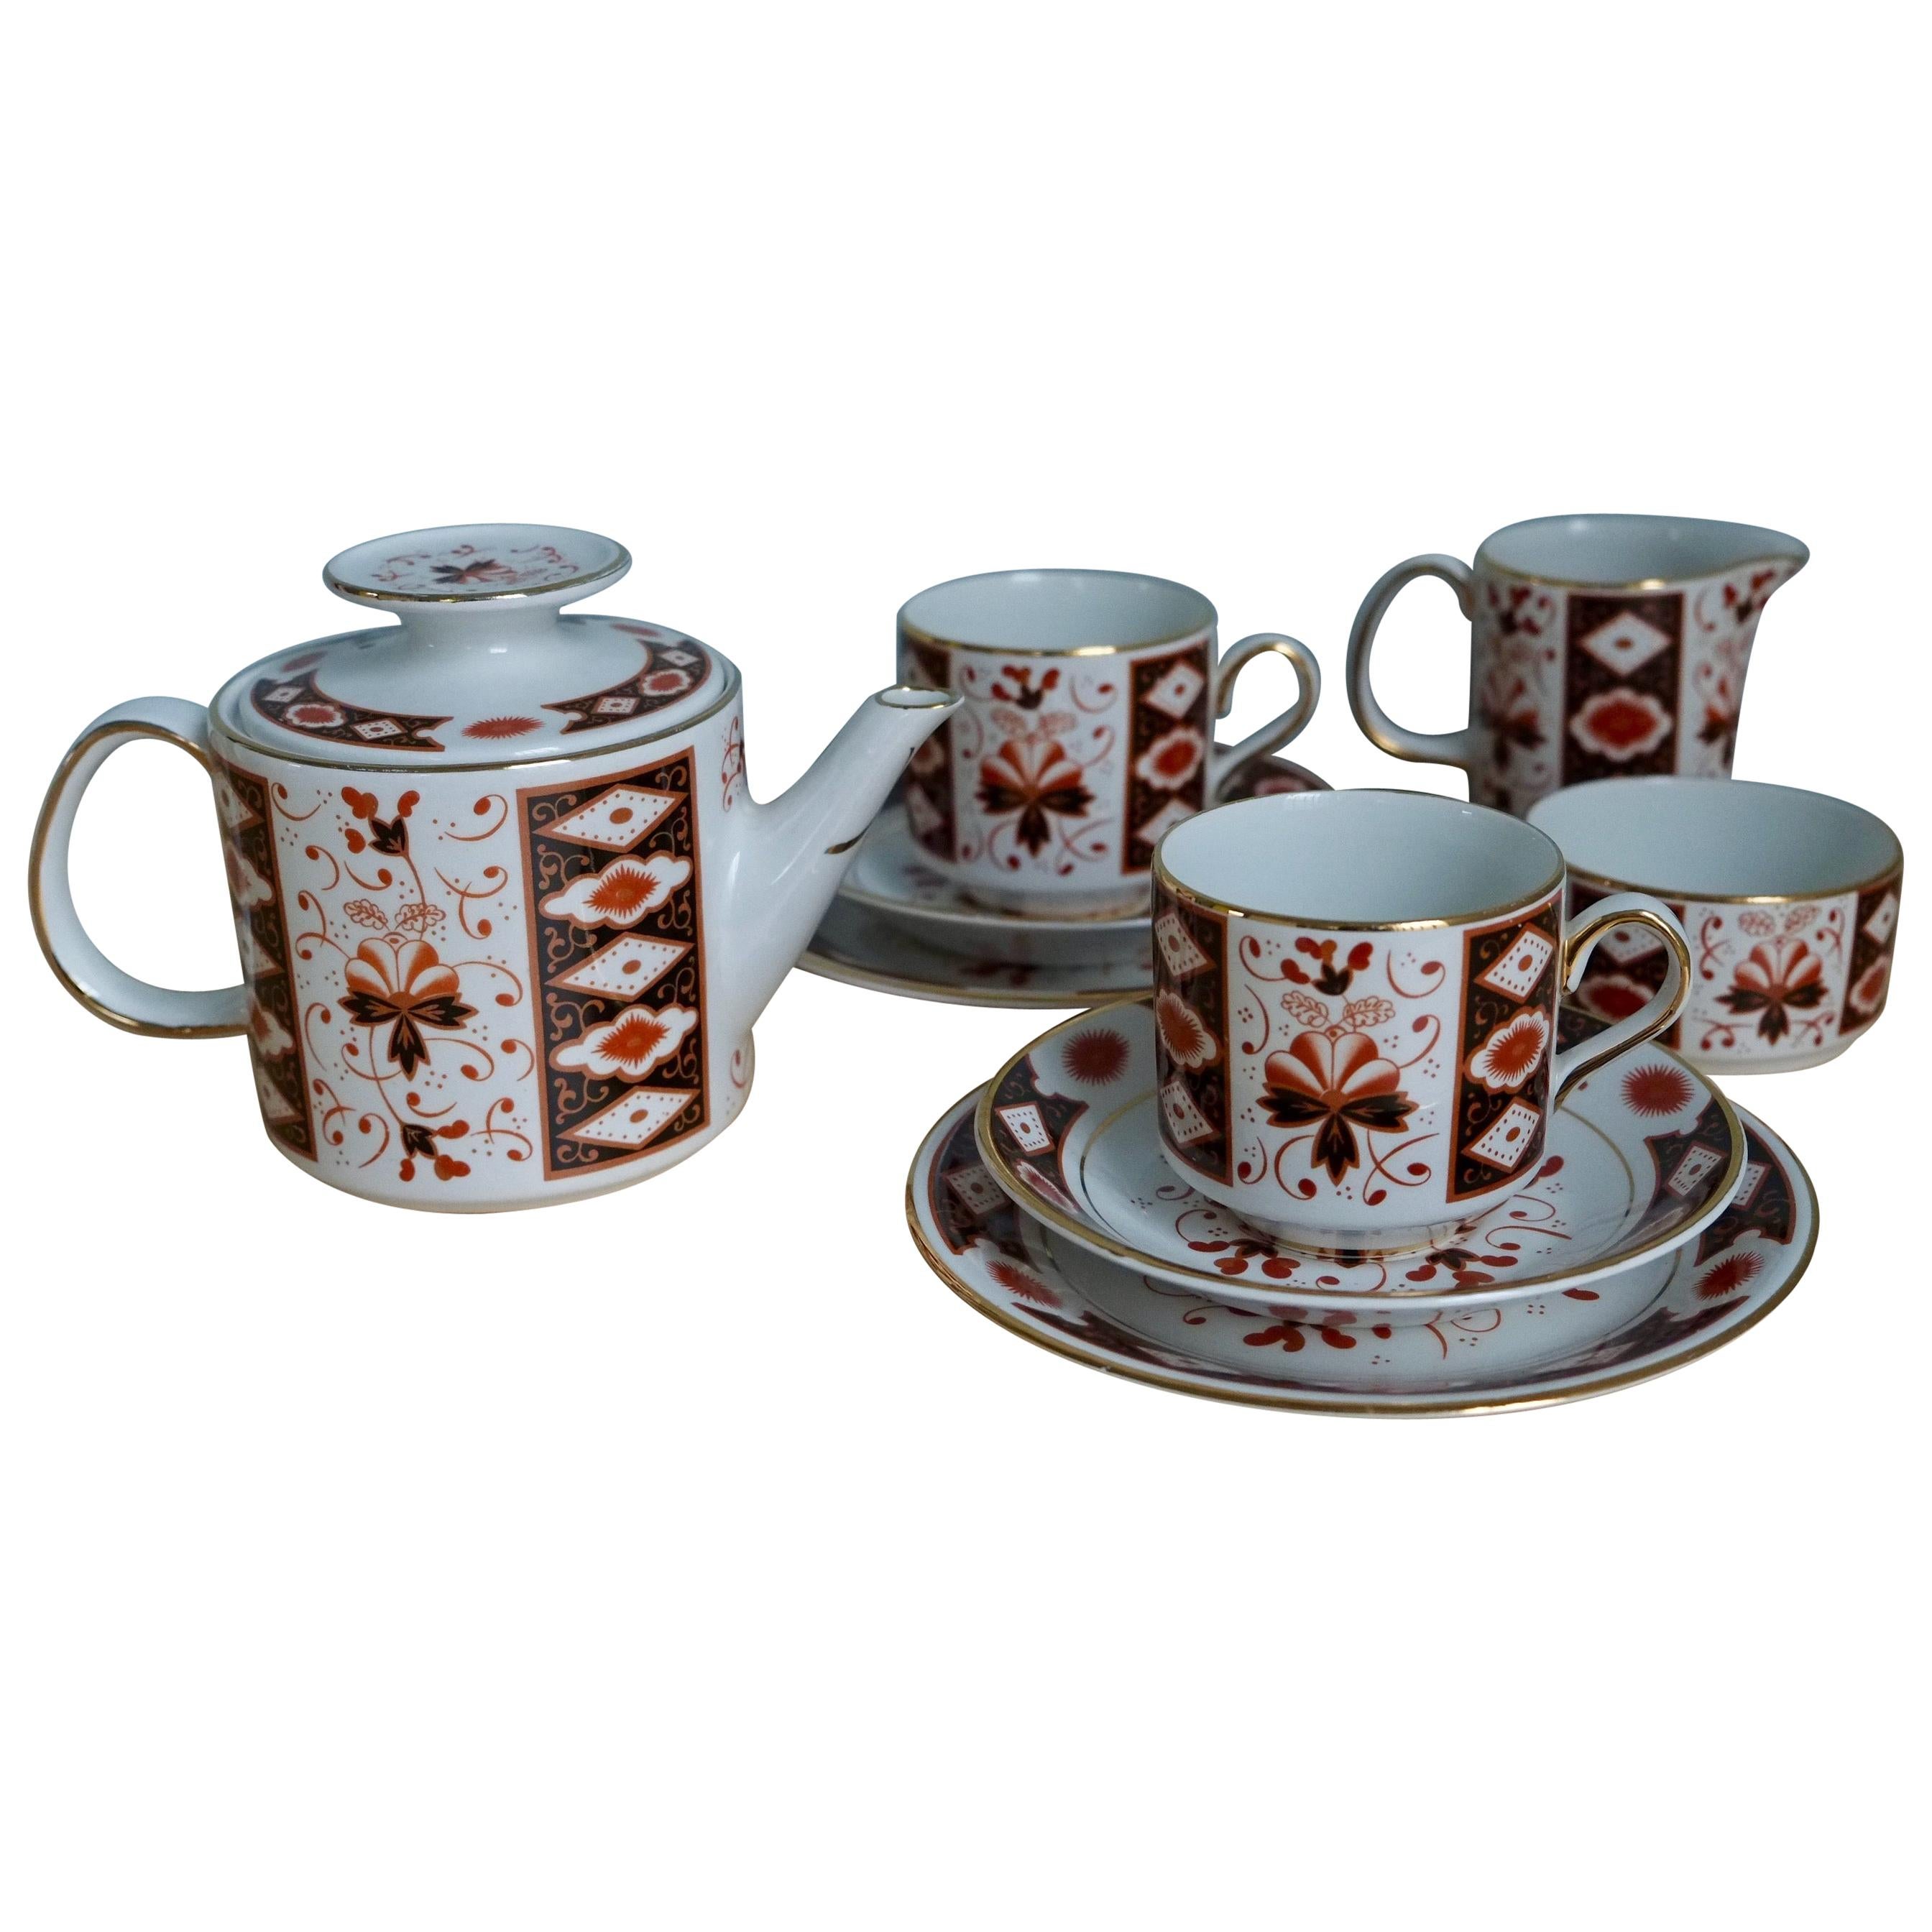 Mid-20th Century Irish Arklow Pottery Tea Set for Two with Teapot